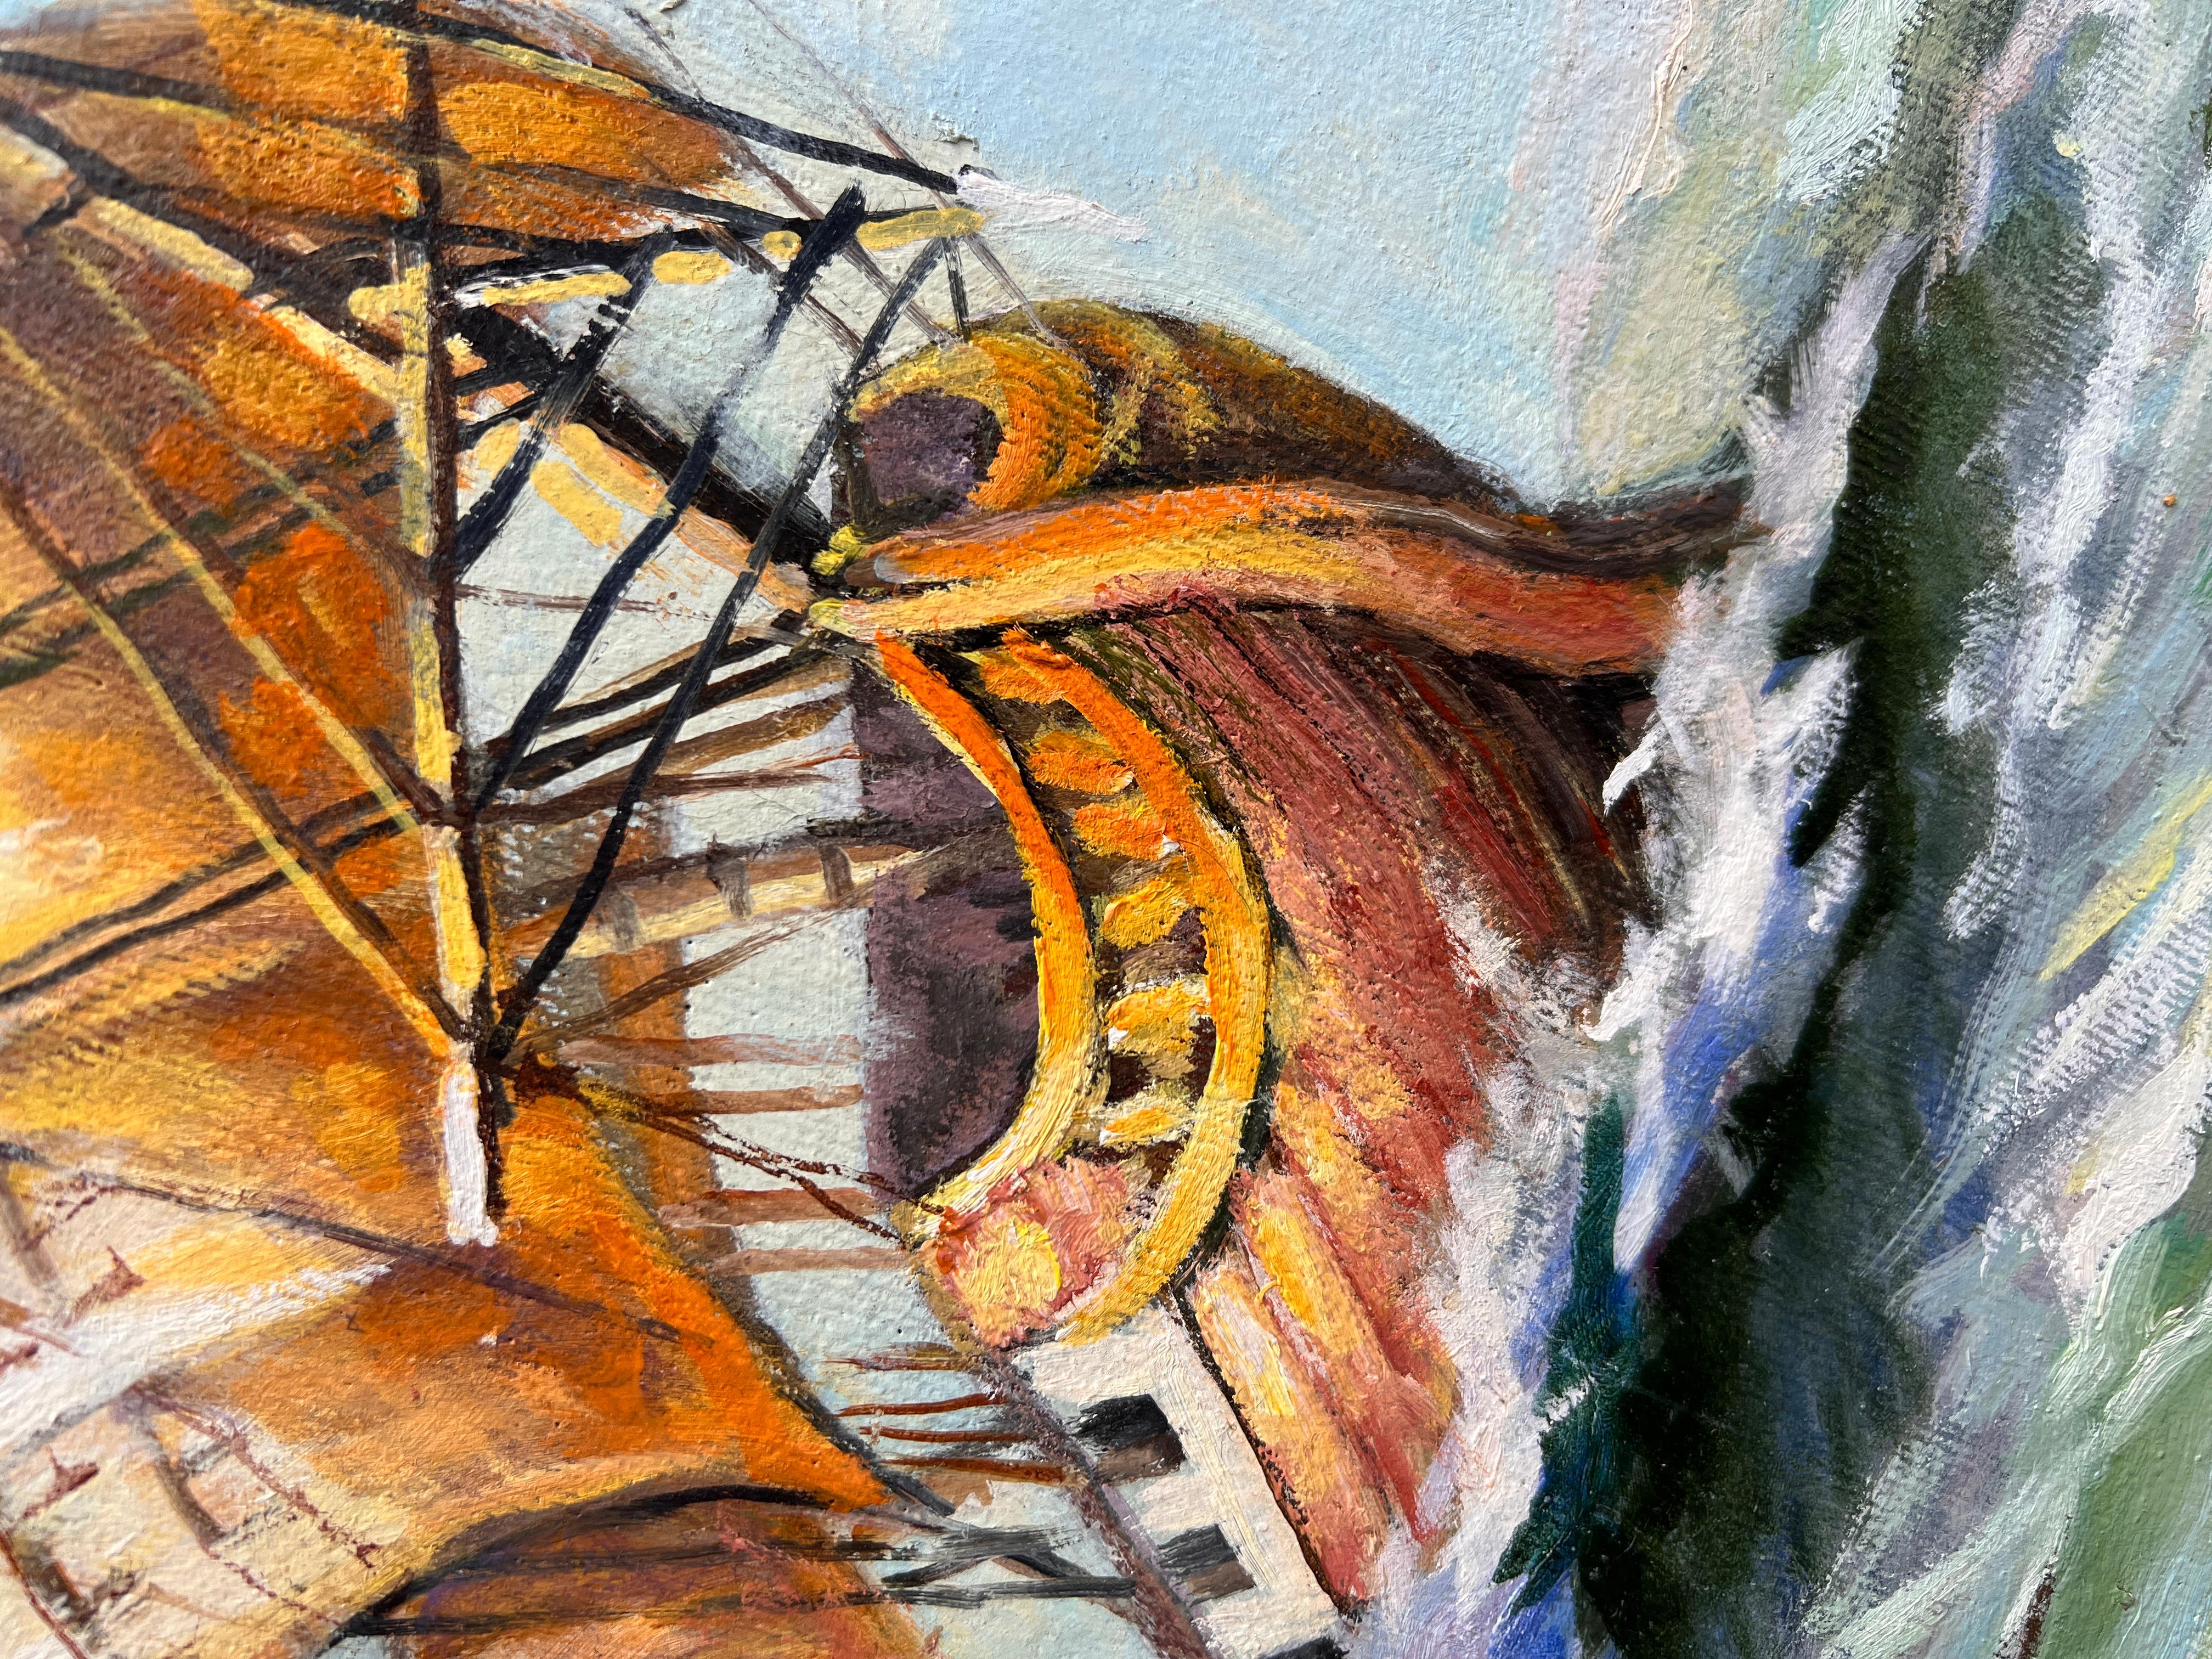 Artist Dobritsin Oil painting on canvas, seascape, Sailing ship, Framed For Sale 2